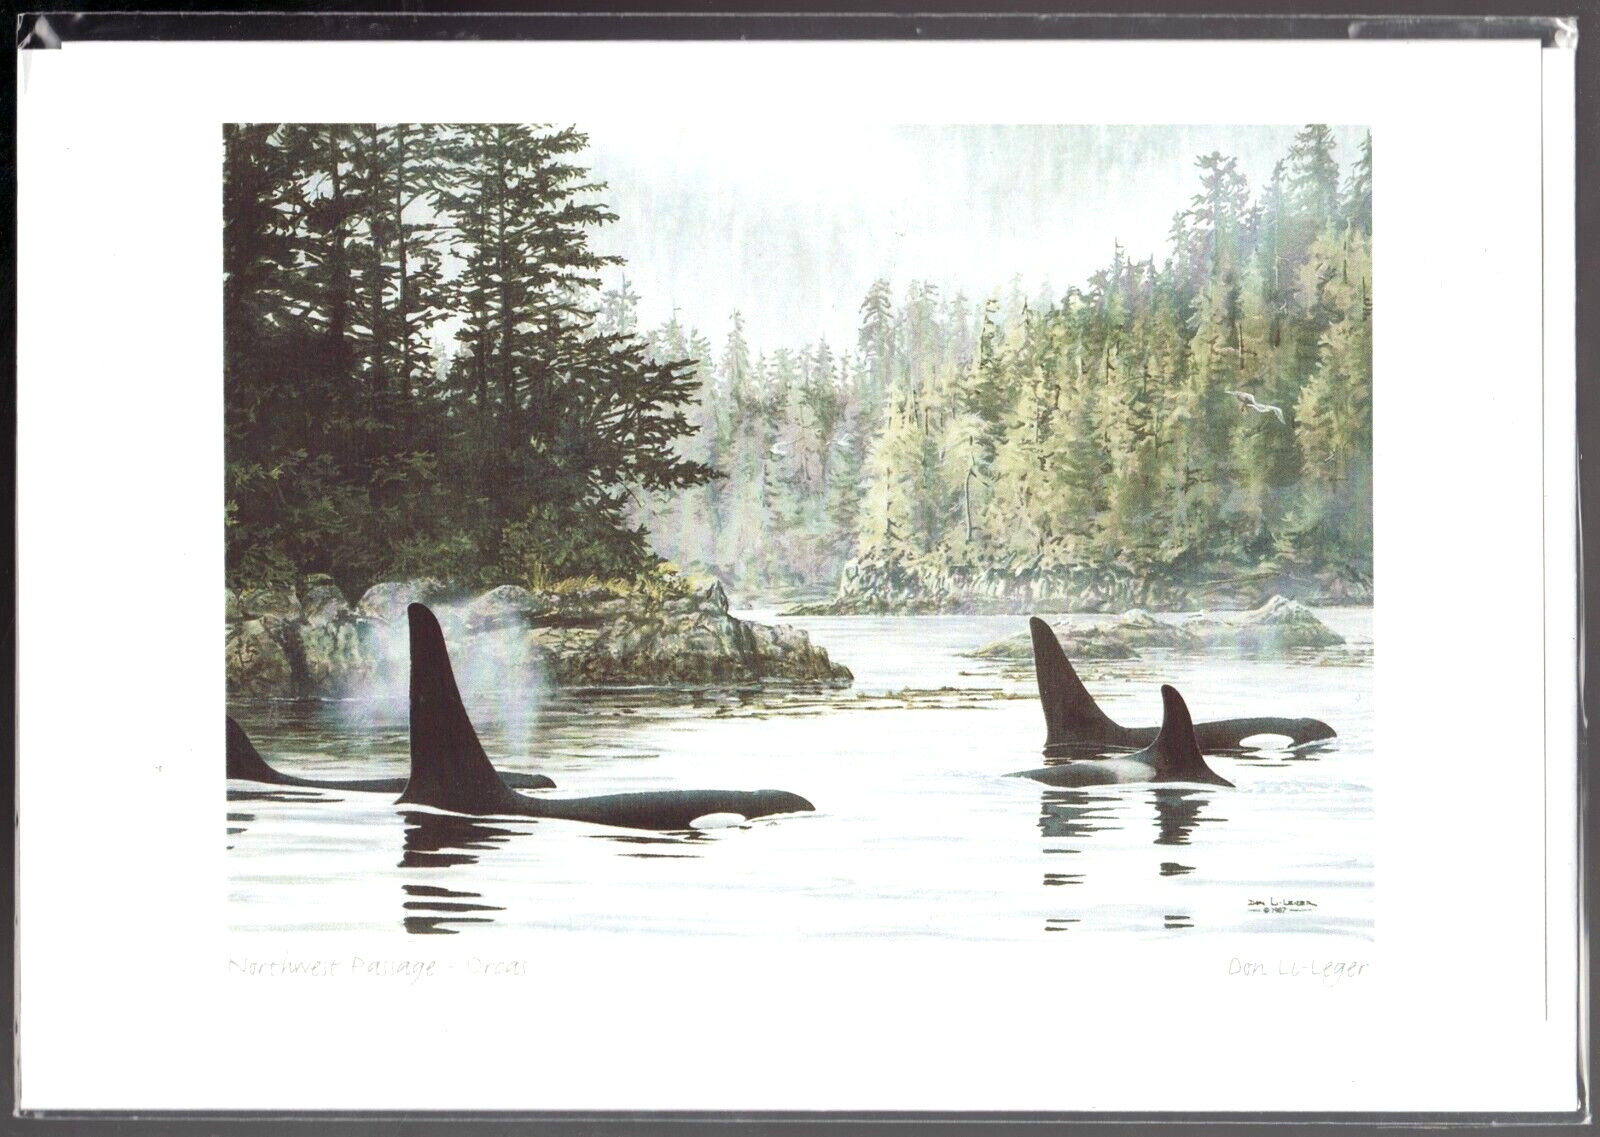 NORTHWEST PASSAGE - ORCA'S  KILLER WHALES by Don Li-Leger - New 6